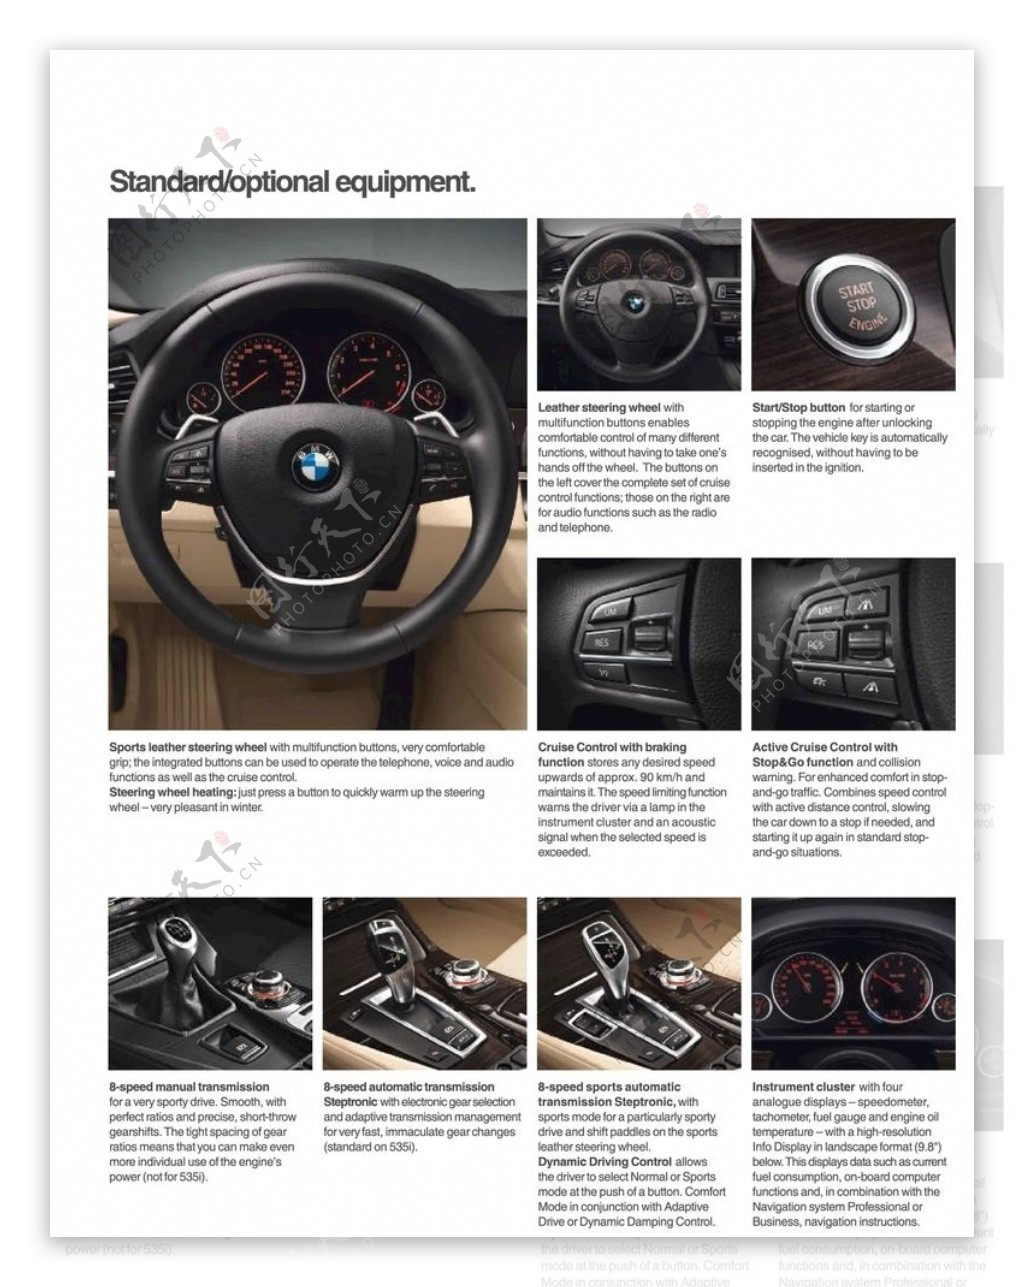 BMW画册设计